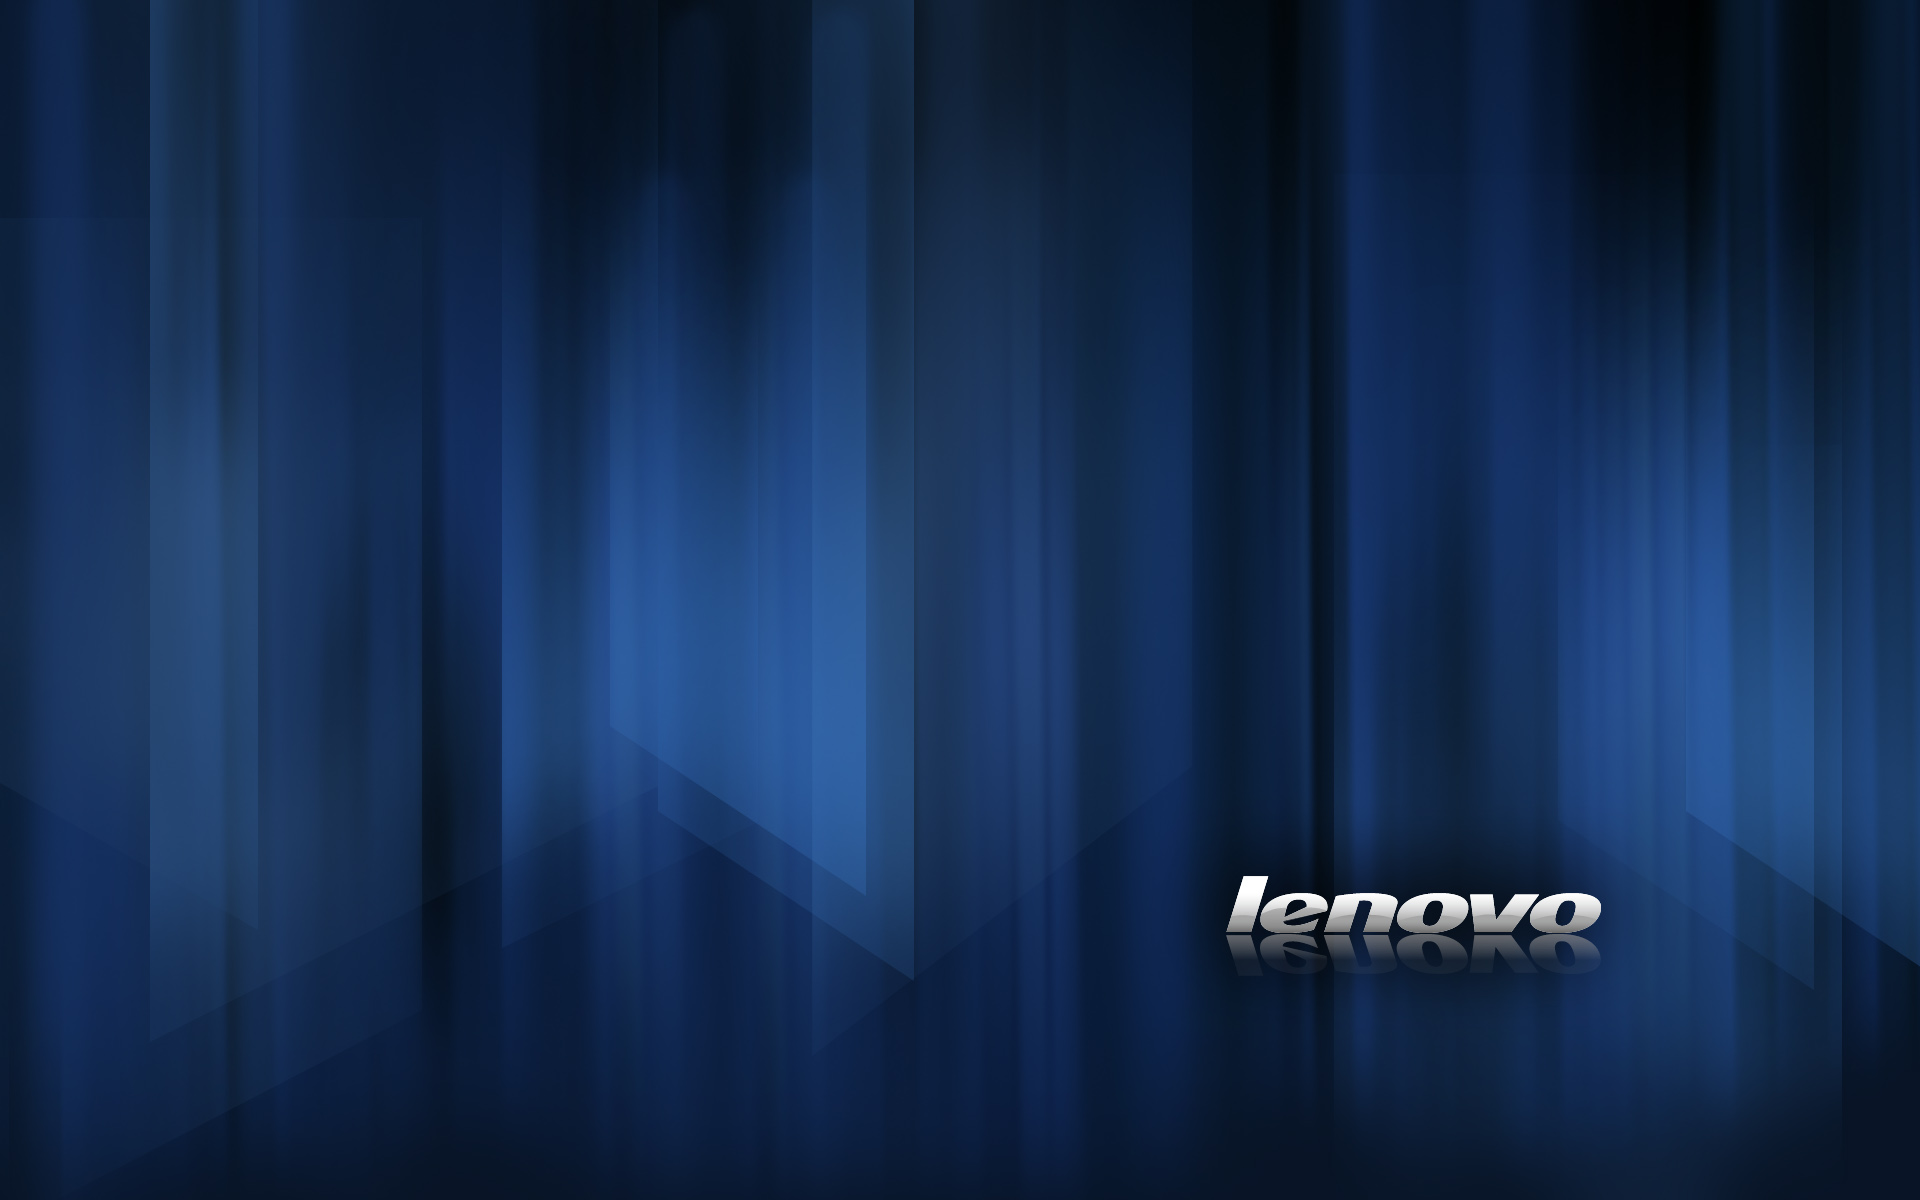 lenovo wallpapers windows web lenovo3 wallpaper posterous leondeljpg 1920x1200